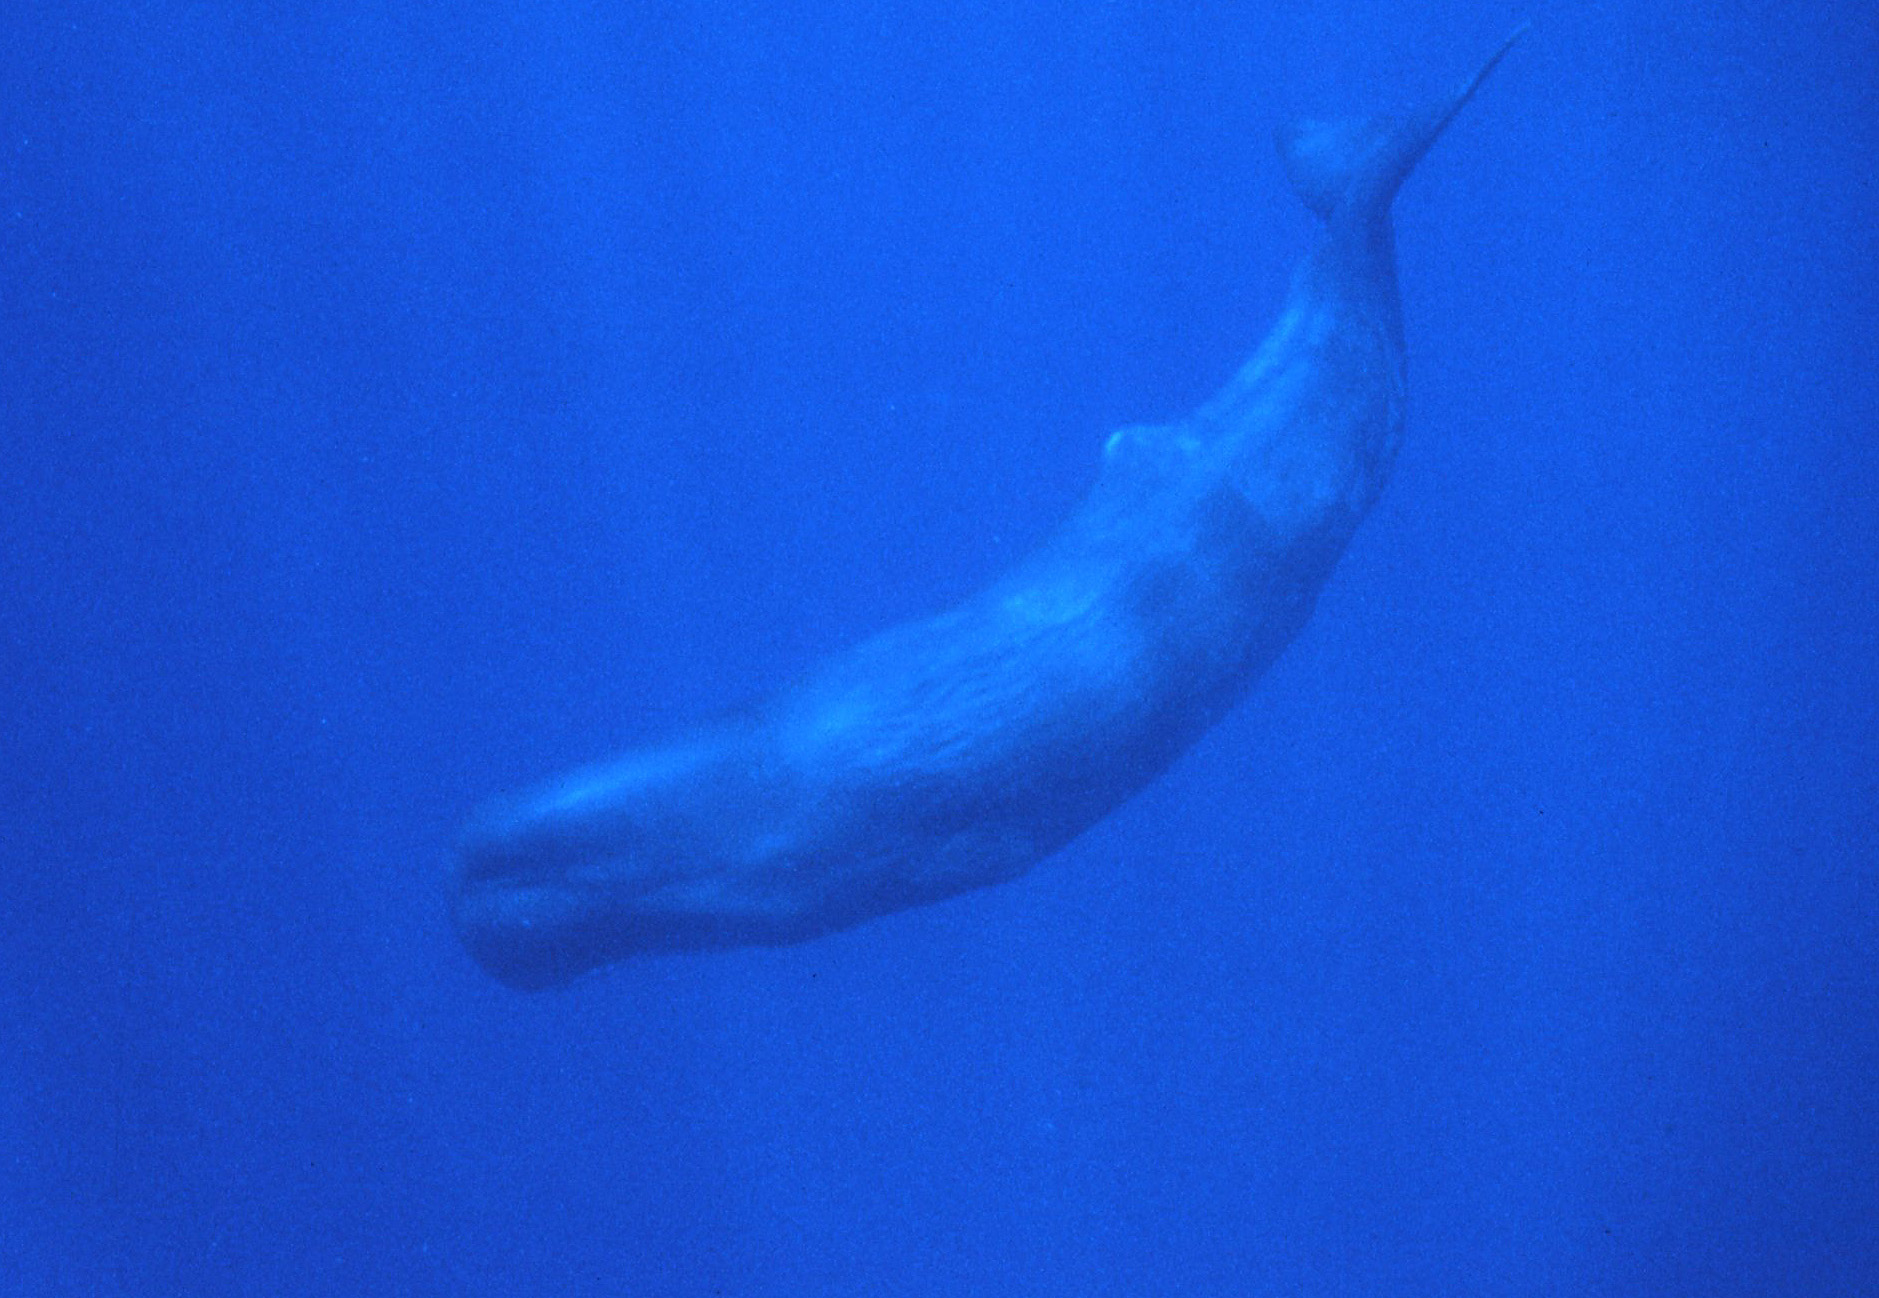 сколько в длину член кита фото 68